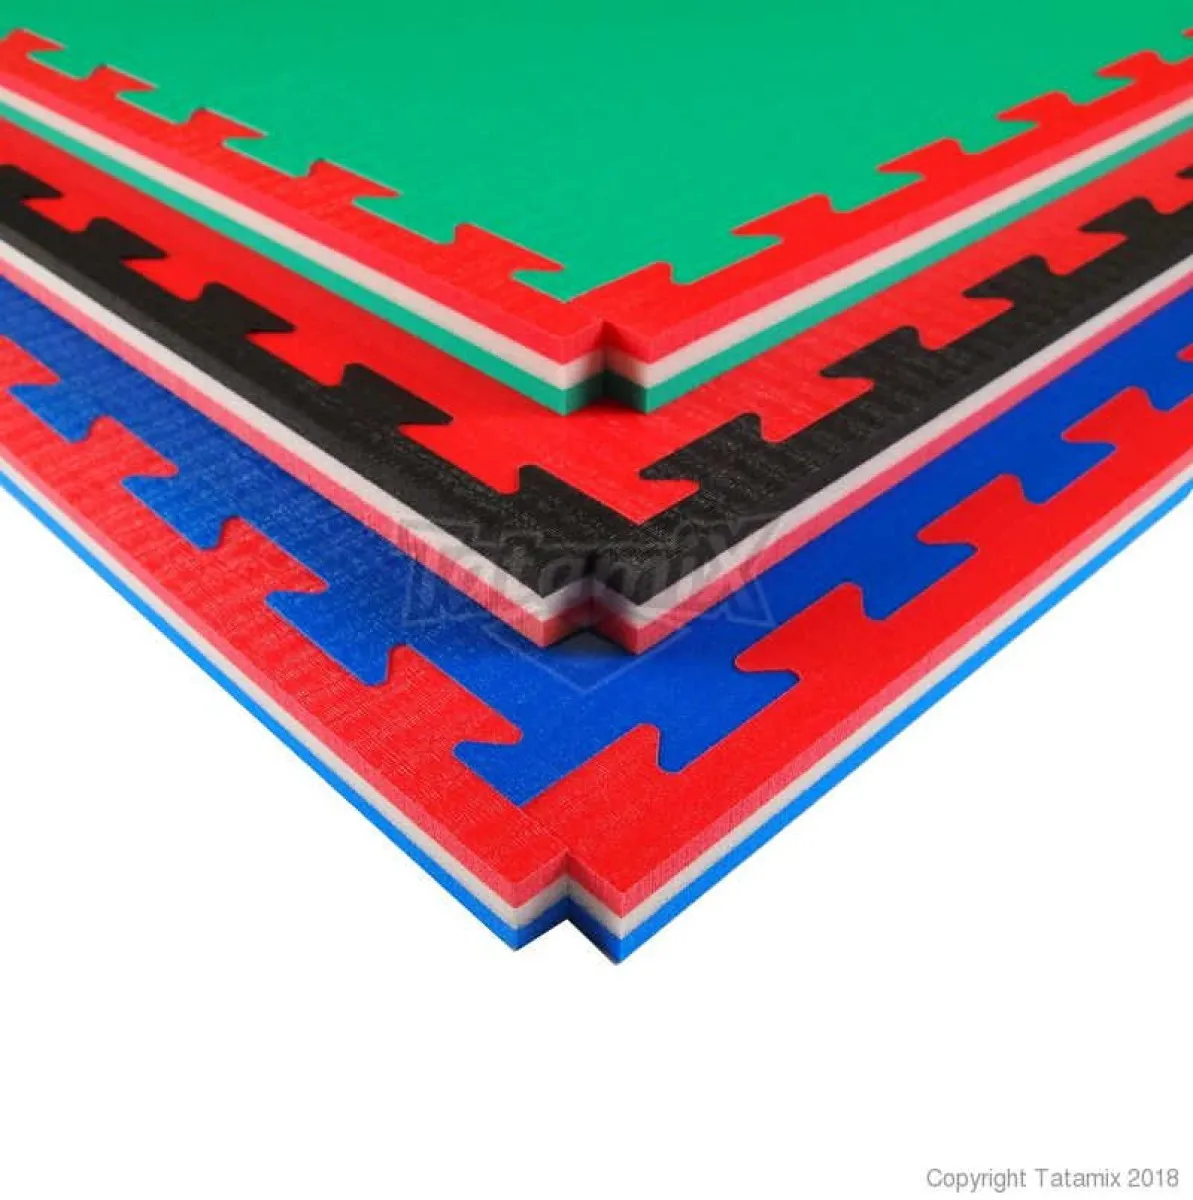 Tatami J30L mat green/white/red 100 cm x 100 cm x 3 cm